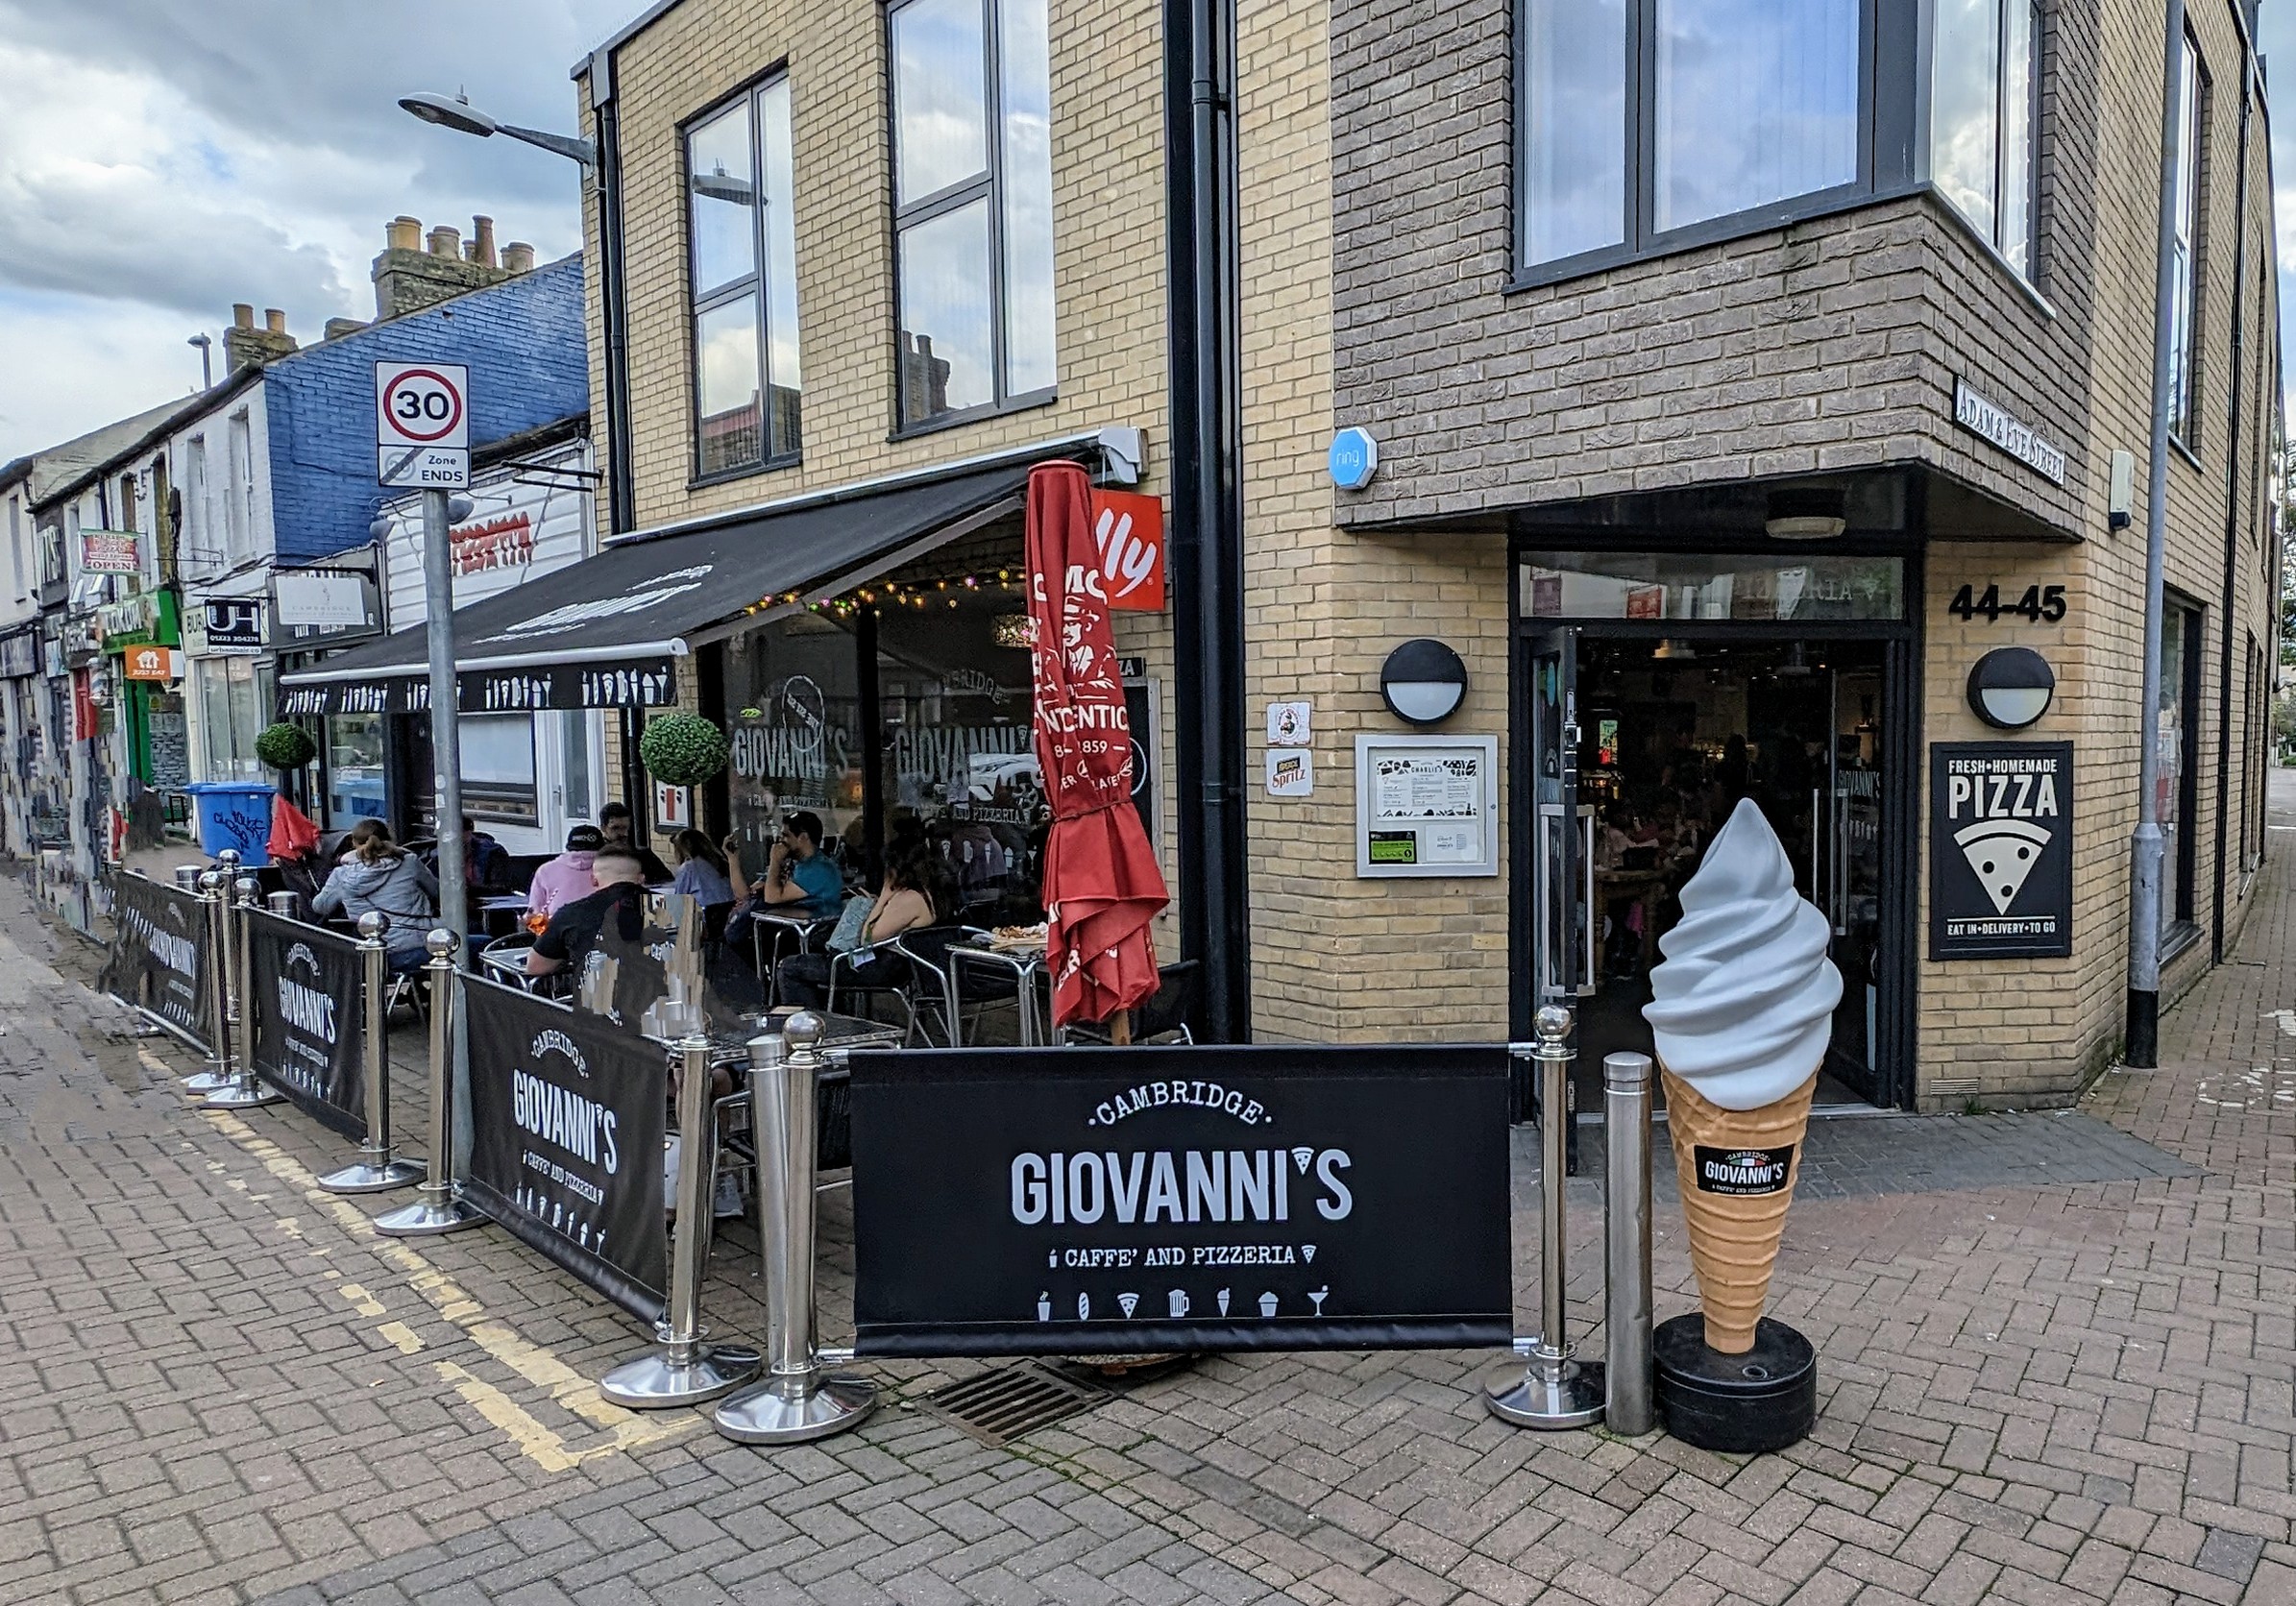 Giovanni’s caffe’ and pizzeria